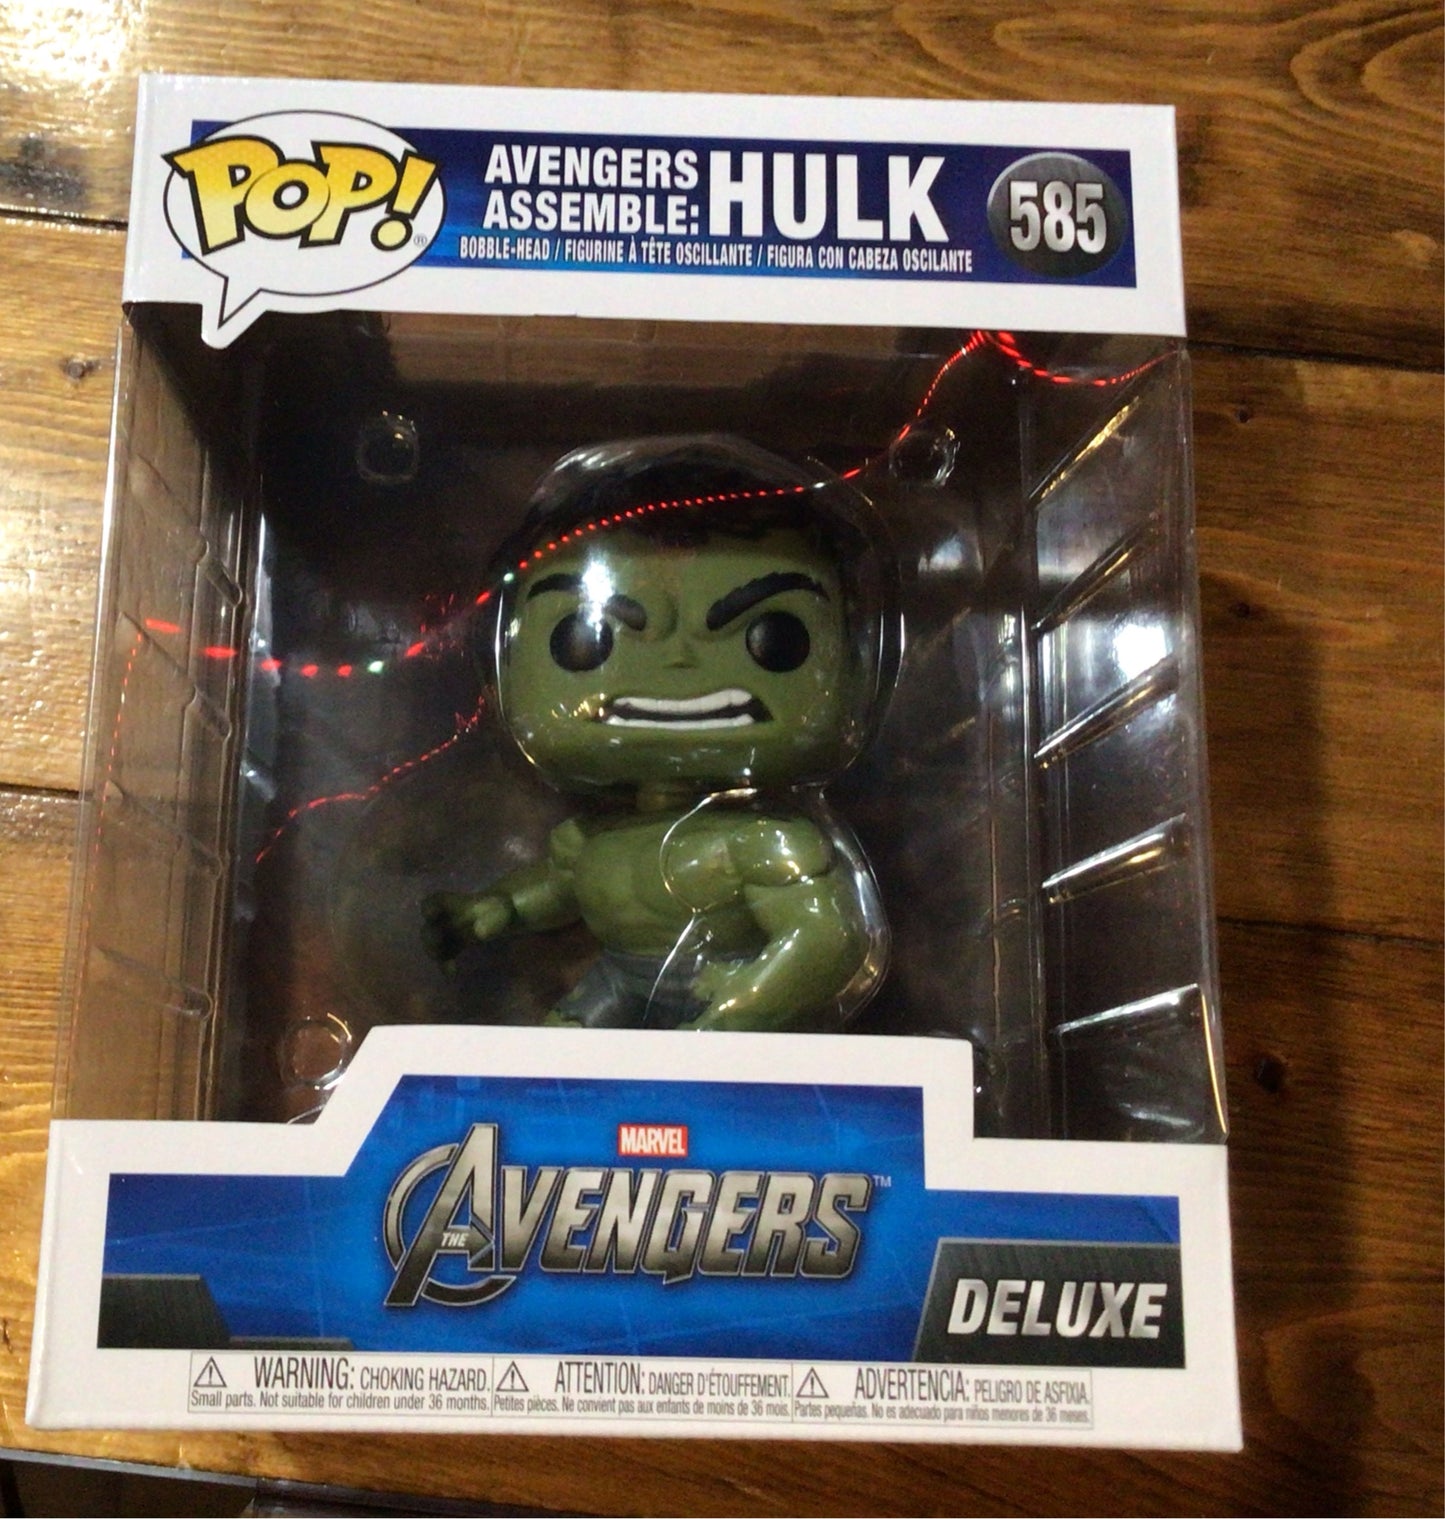 Hulk - Hulk (Assemble) POP! Vinyl Deluxe - Funko Pop